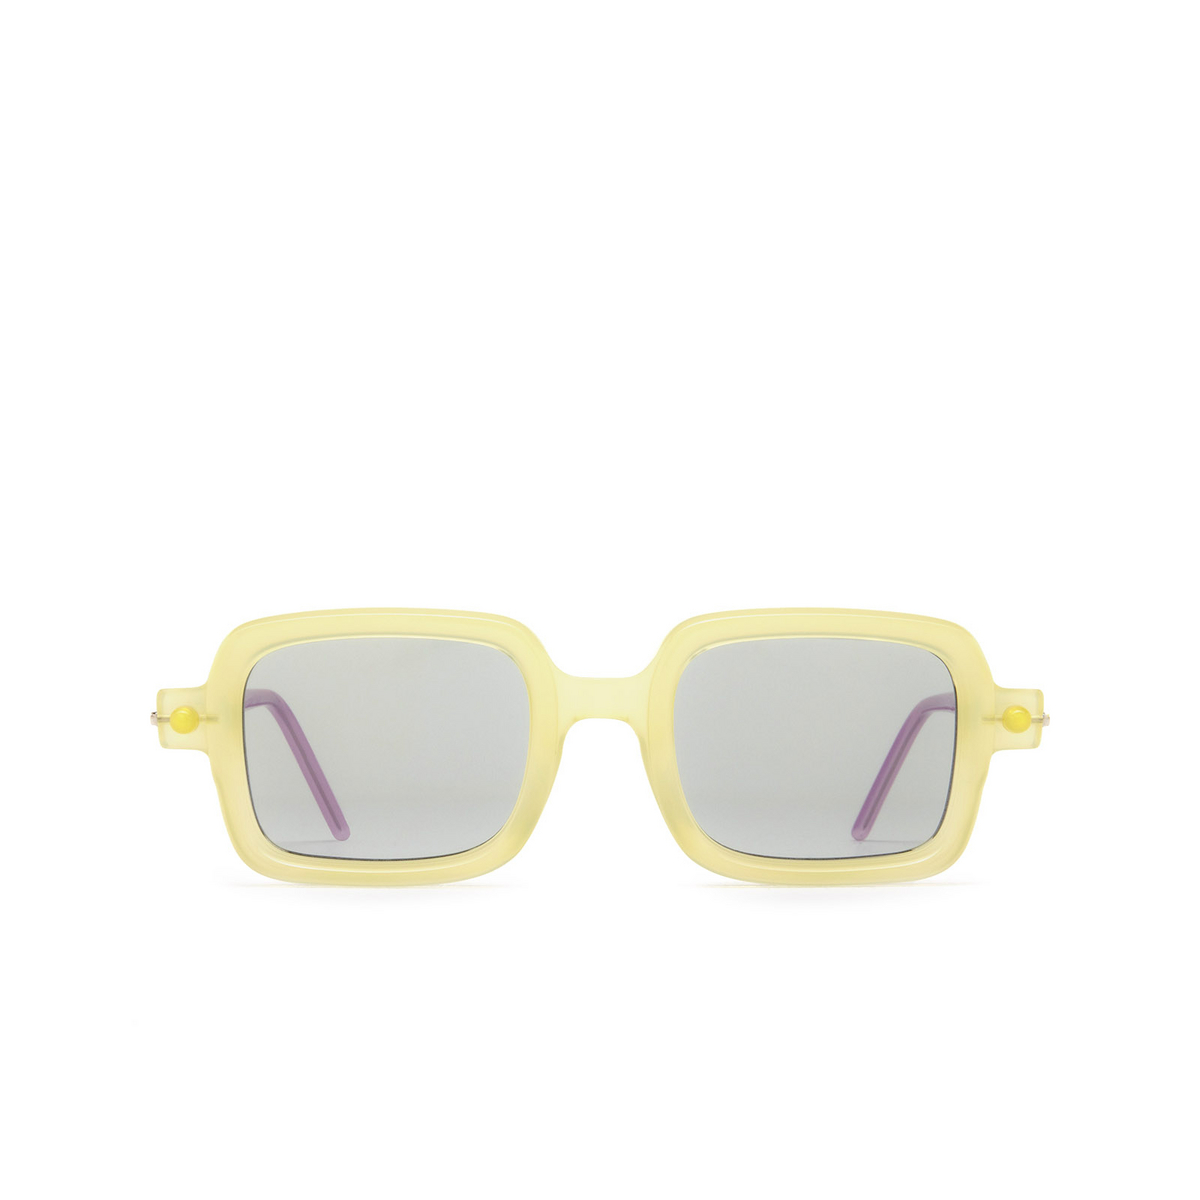 Kuboraum P2 Sunglasses YW Pale Yellow, Blue & Lilac - front view